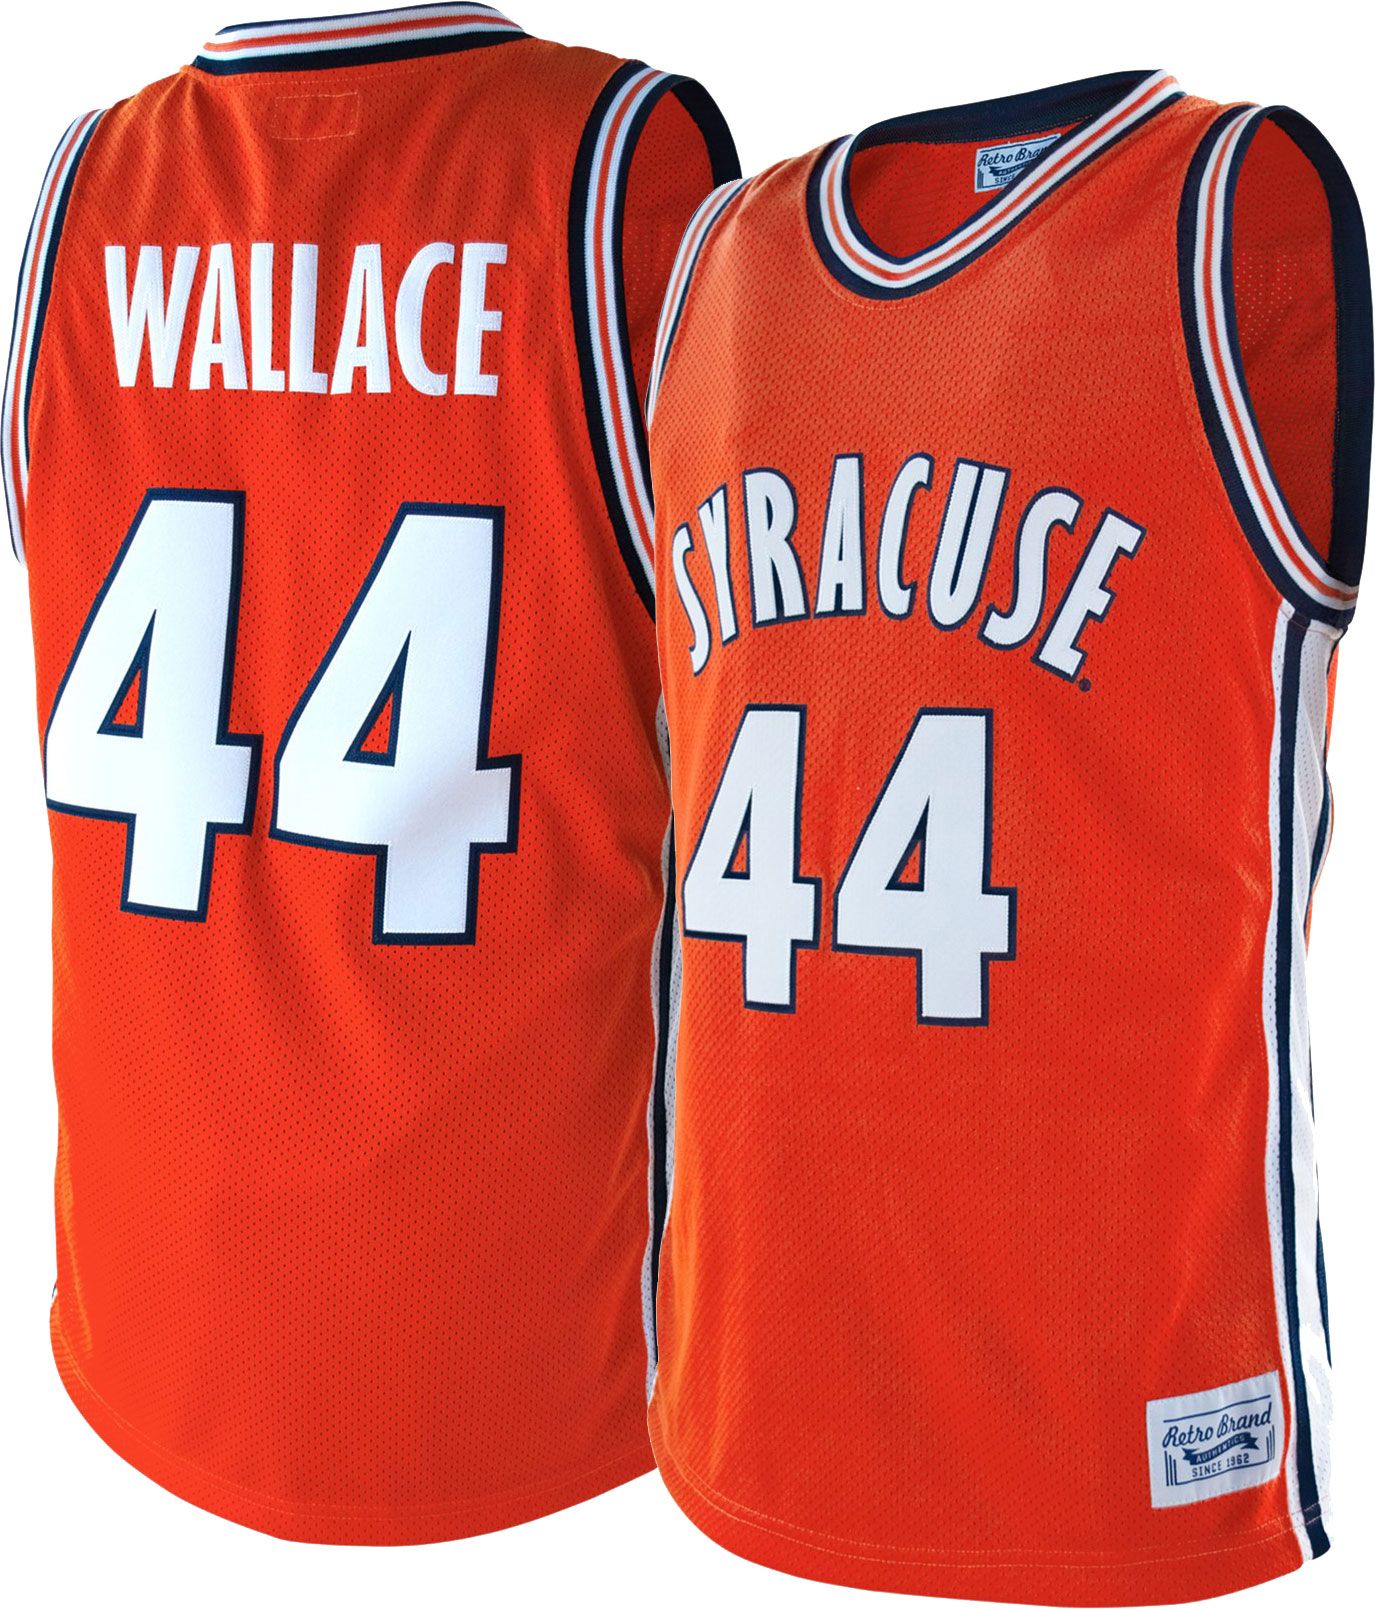 Retro Brand Men's Syracuse Orange John Wallace #44 Replica Basketball Jersey